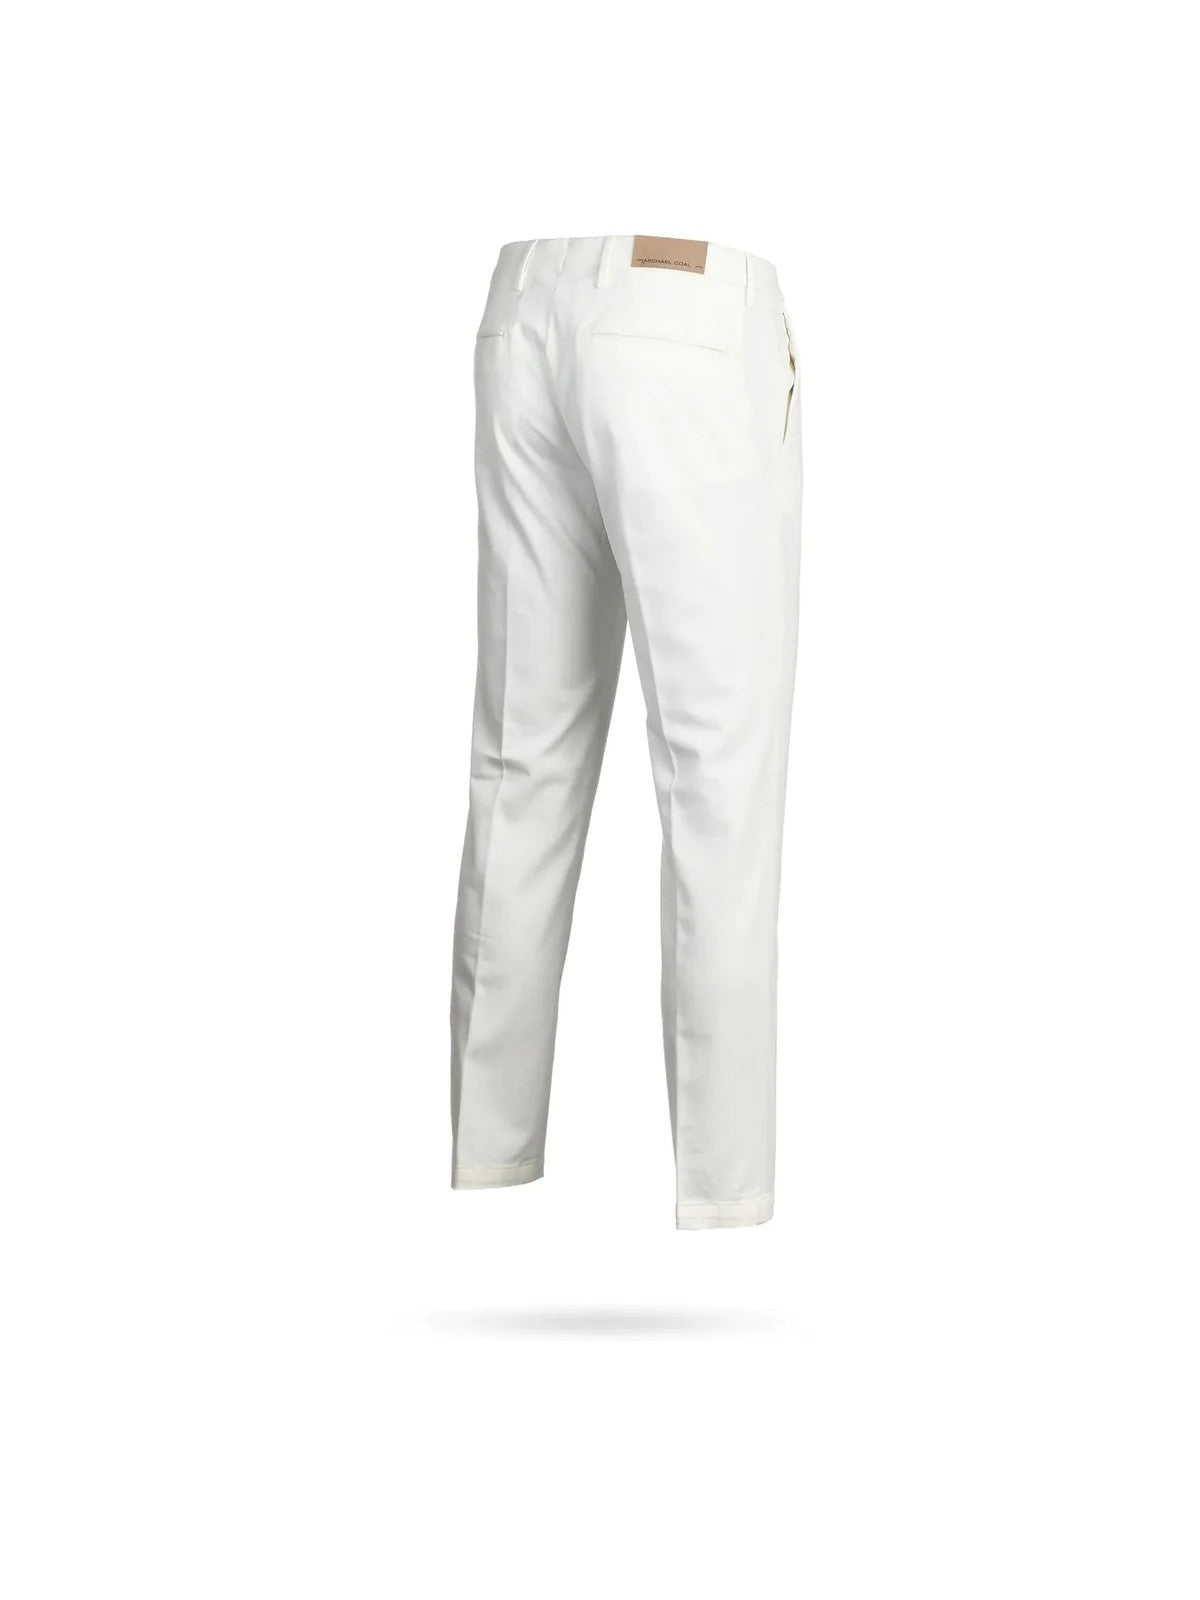 MICHAEL COAL Pantalon homme MCBRA3862F22L 009 Blanc